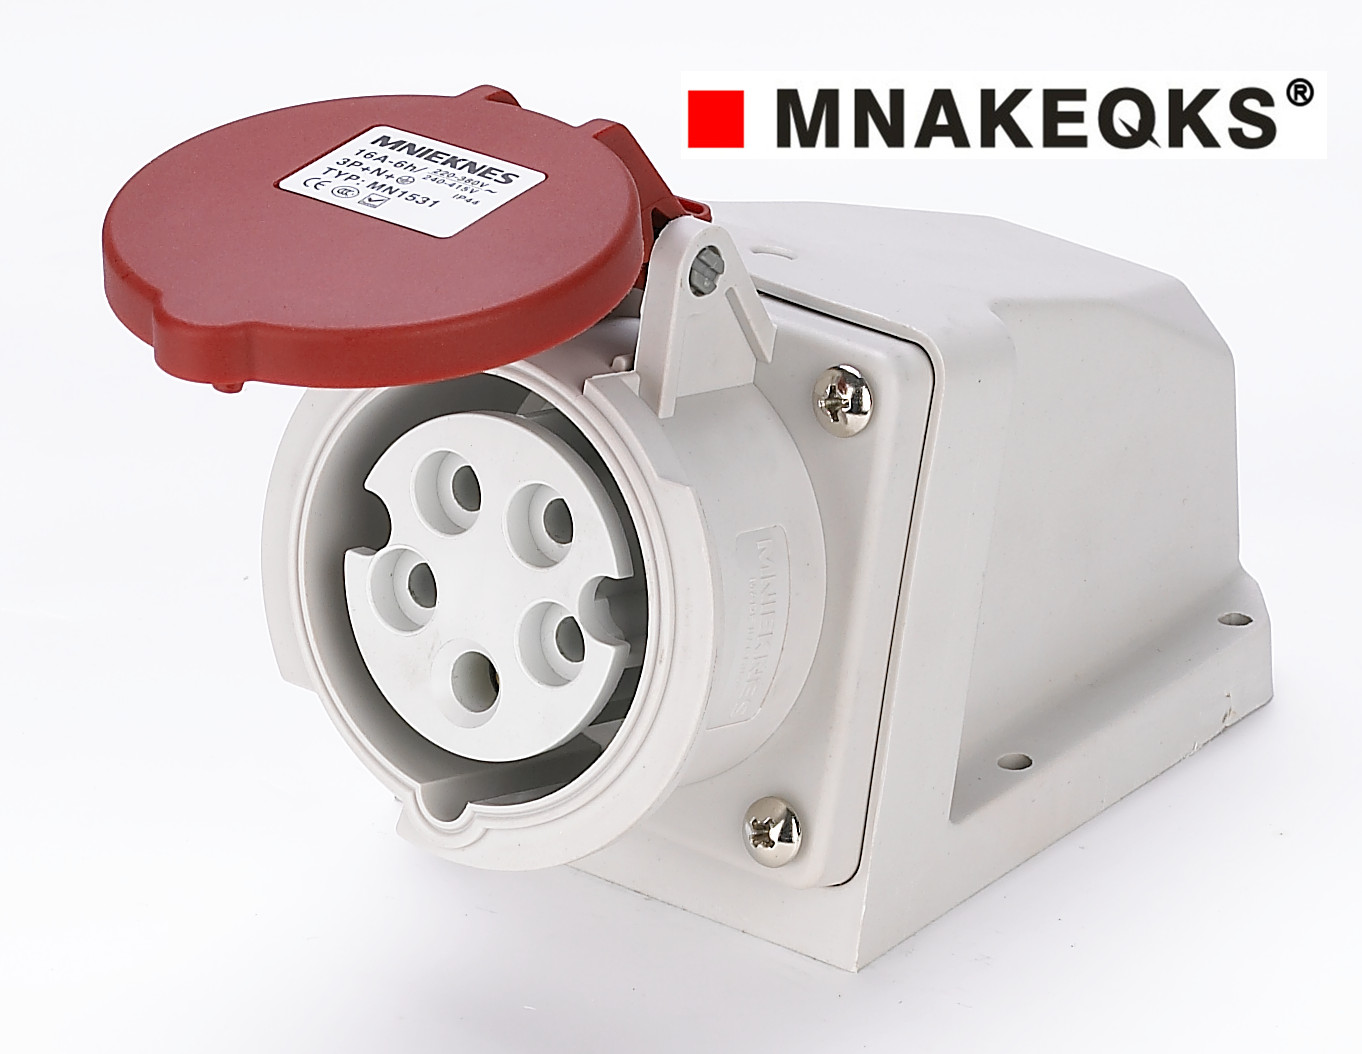 MNAKEQKS明装电源插座 插座箱暗装插座 户外防雨插头 定制图片